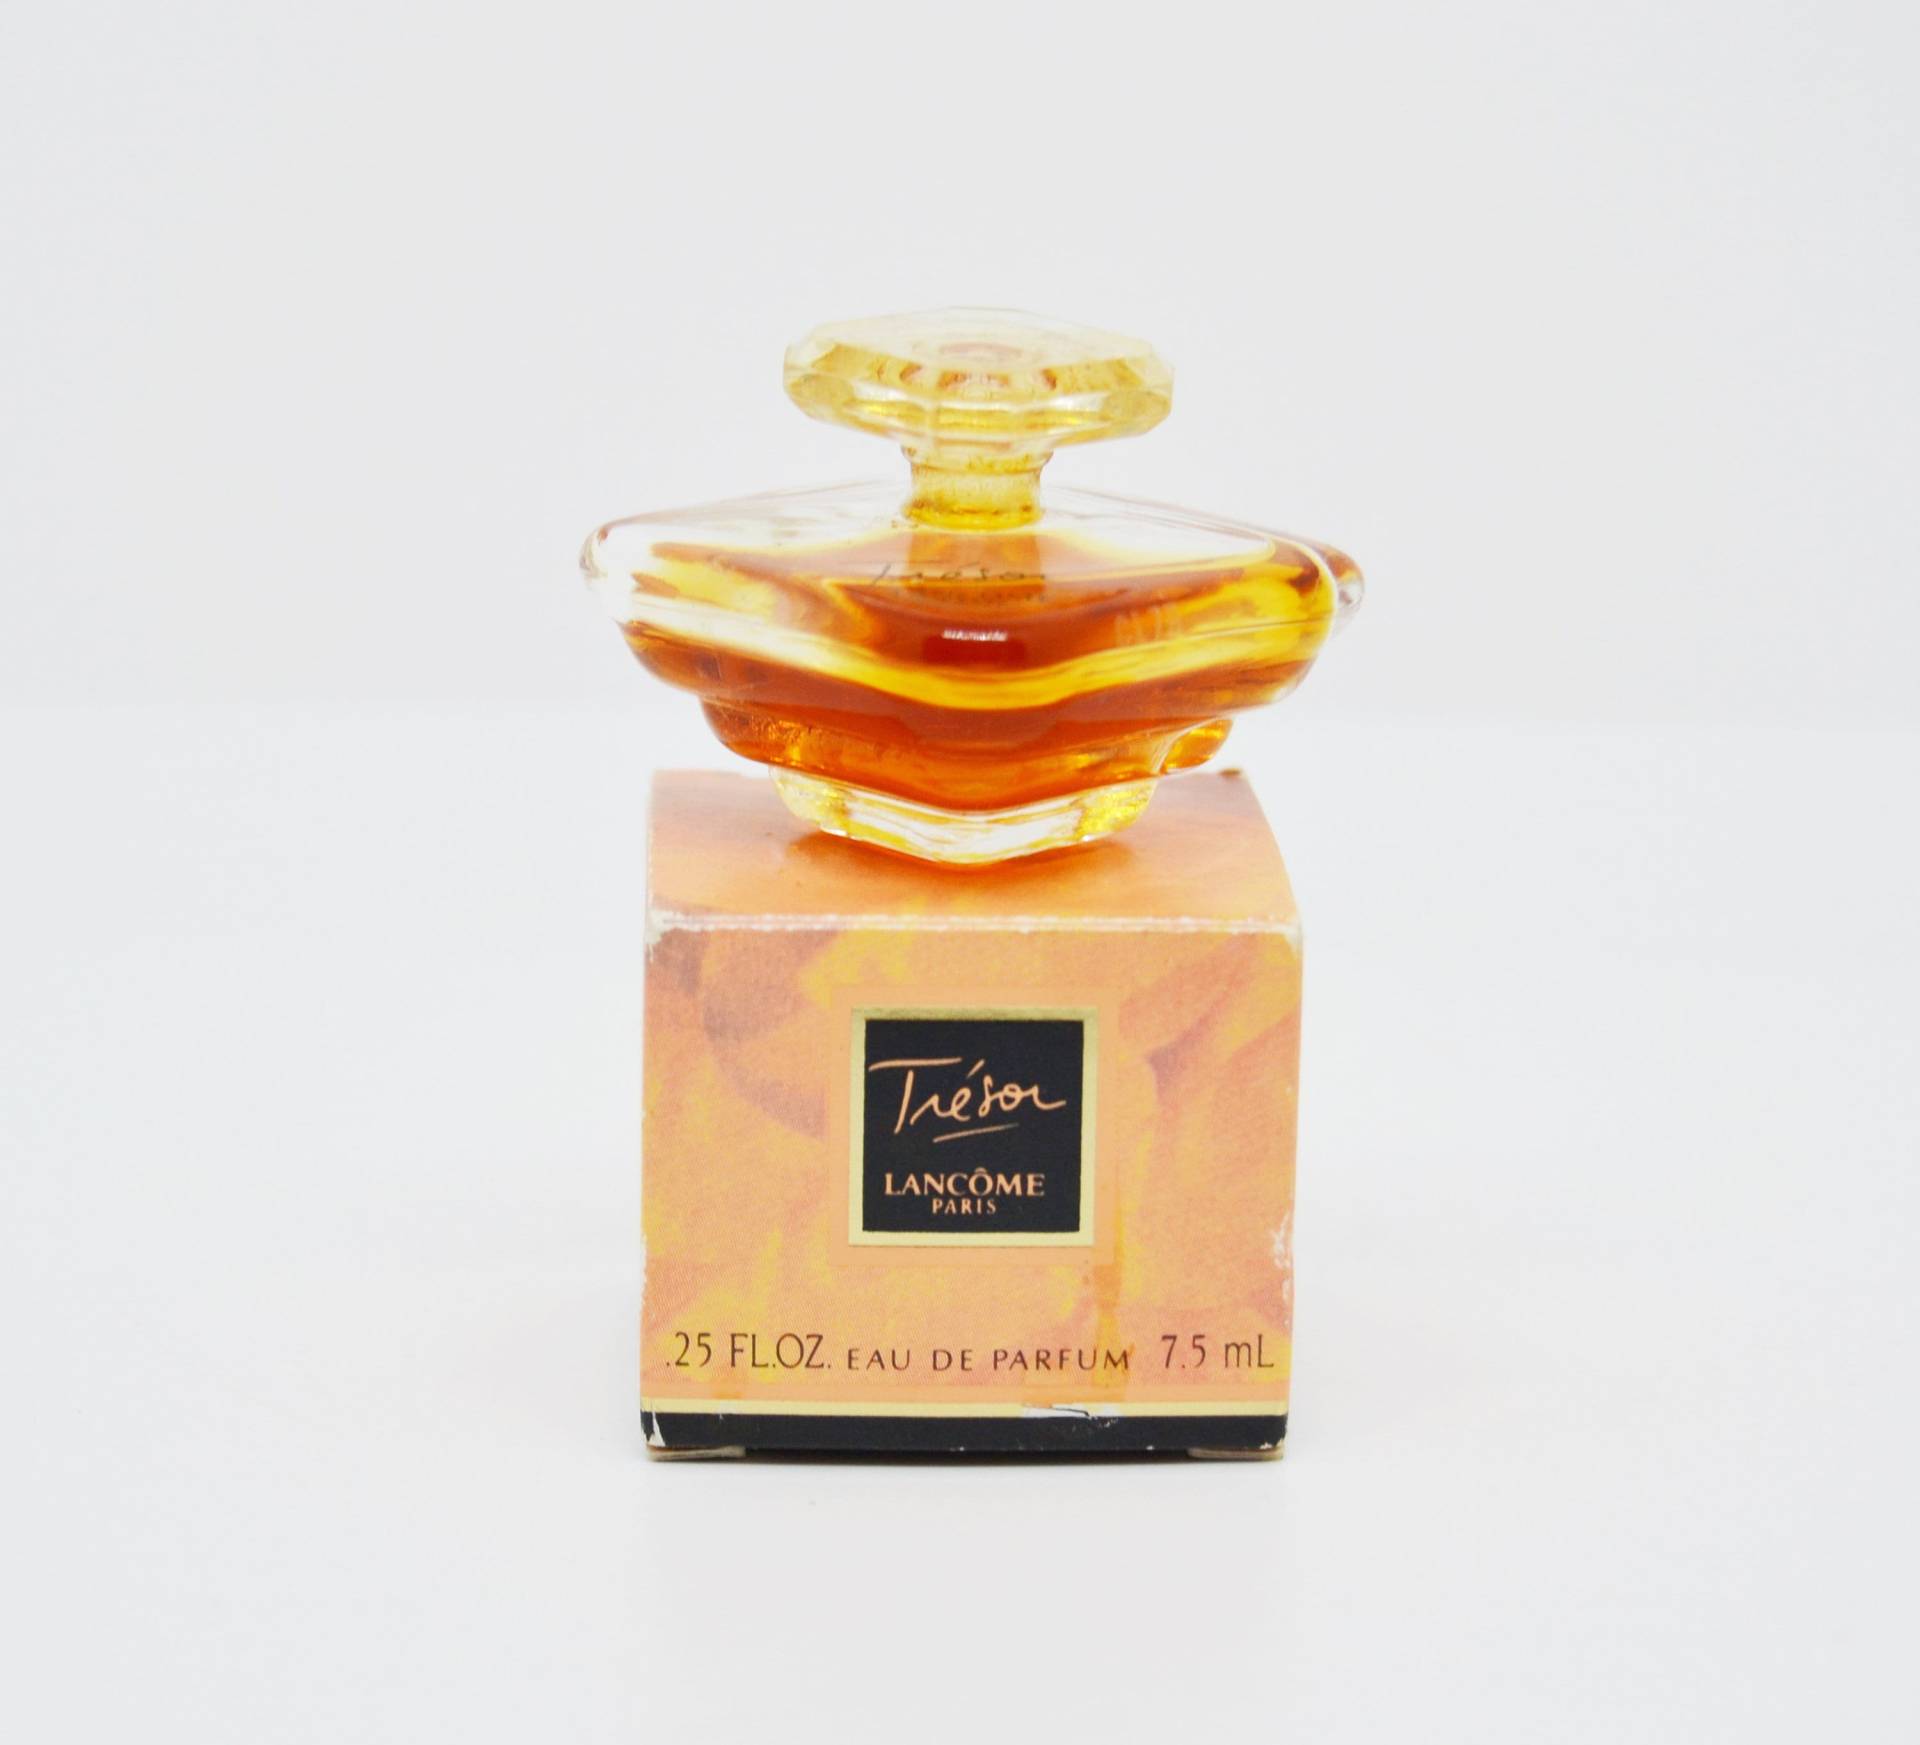 Miniatur Parfüm Tresor Verwendet Wenig, Lancome Eau De Parfum Edp 7, 5Ml Miniatur-Sensation Ohne Spray Seltene Frau Vintage 1990 von VintageTesorosDiseno